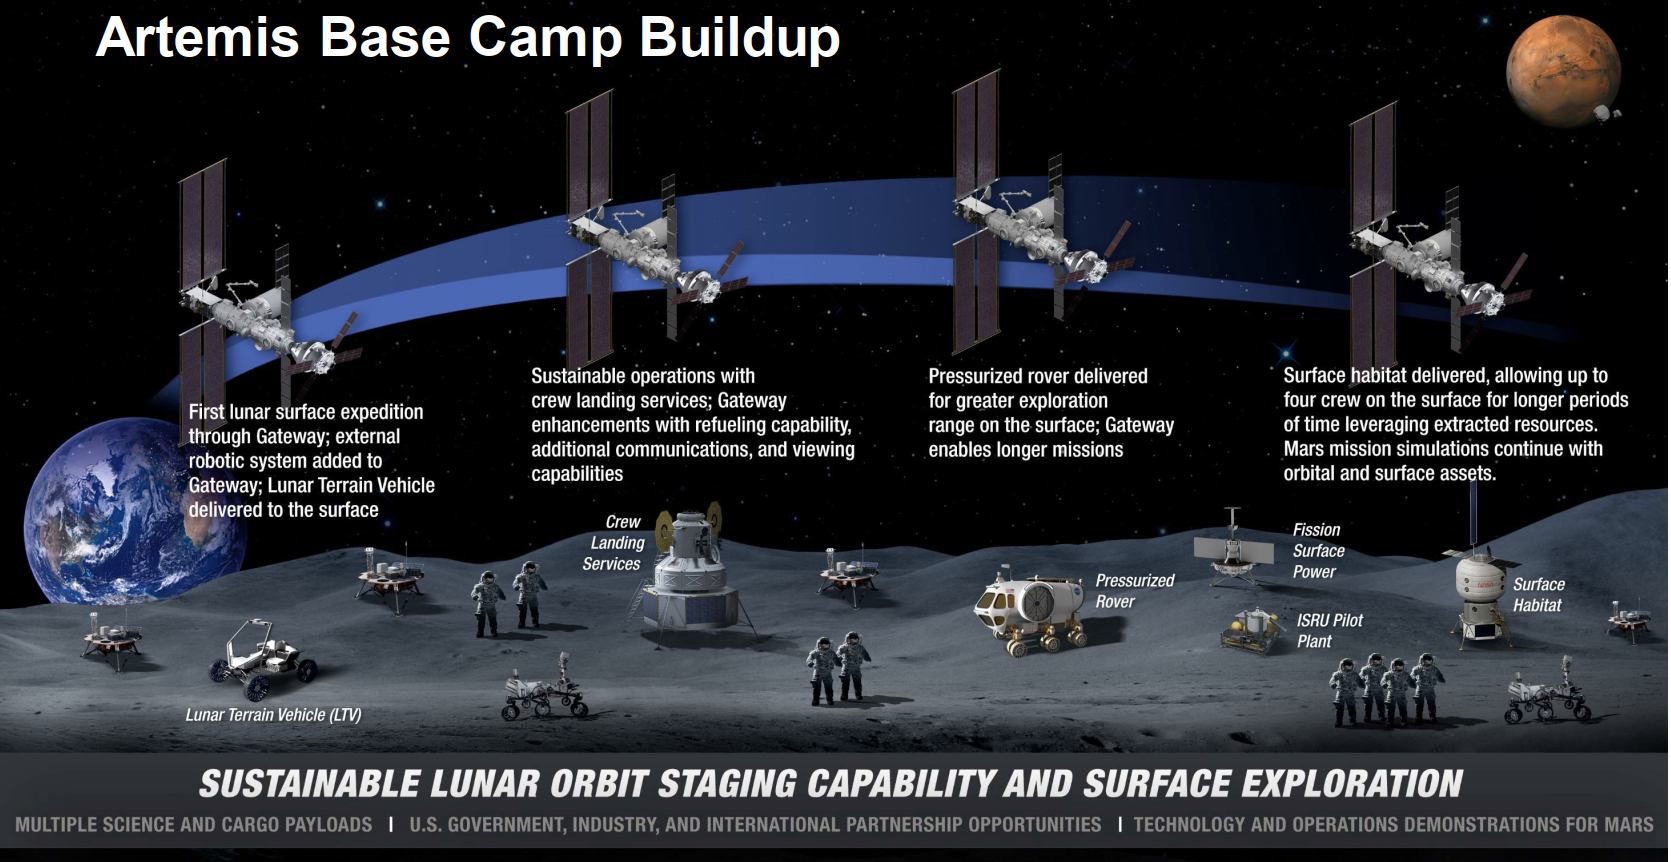 Artemis計画では、月の南極域にベースキャンプを構築。実現するために船外服や曝露ローバーや与圧ローバー、月面通信、居住などさまざまな研究が進行中という（出典：「FY 2022 NASA Budget Request」）